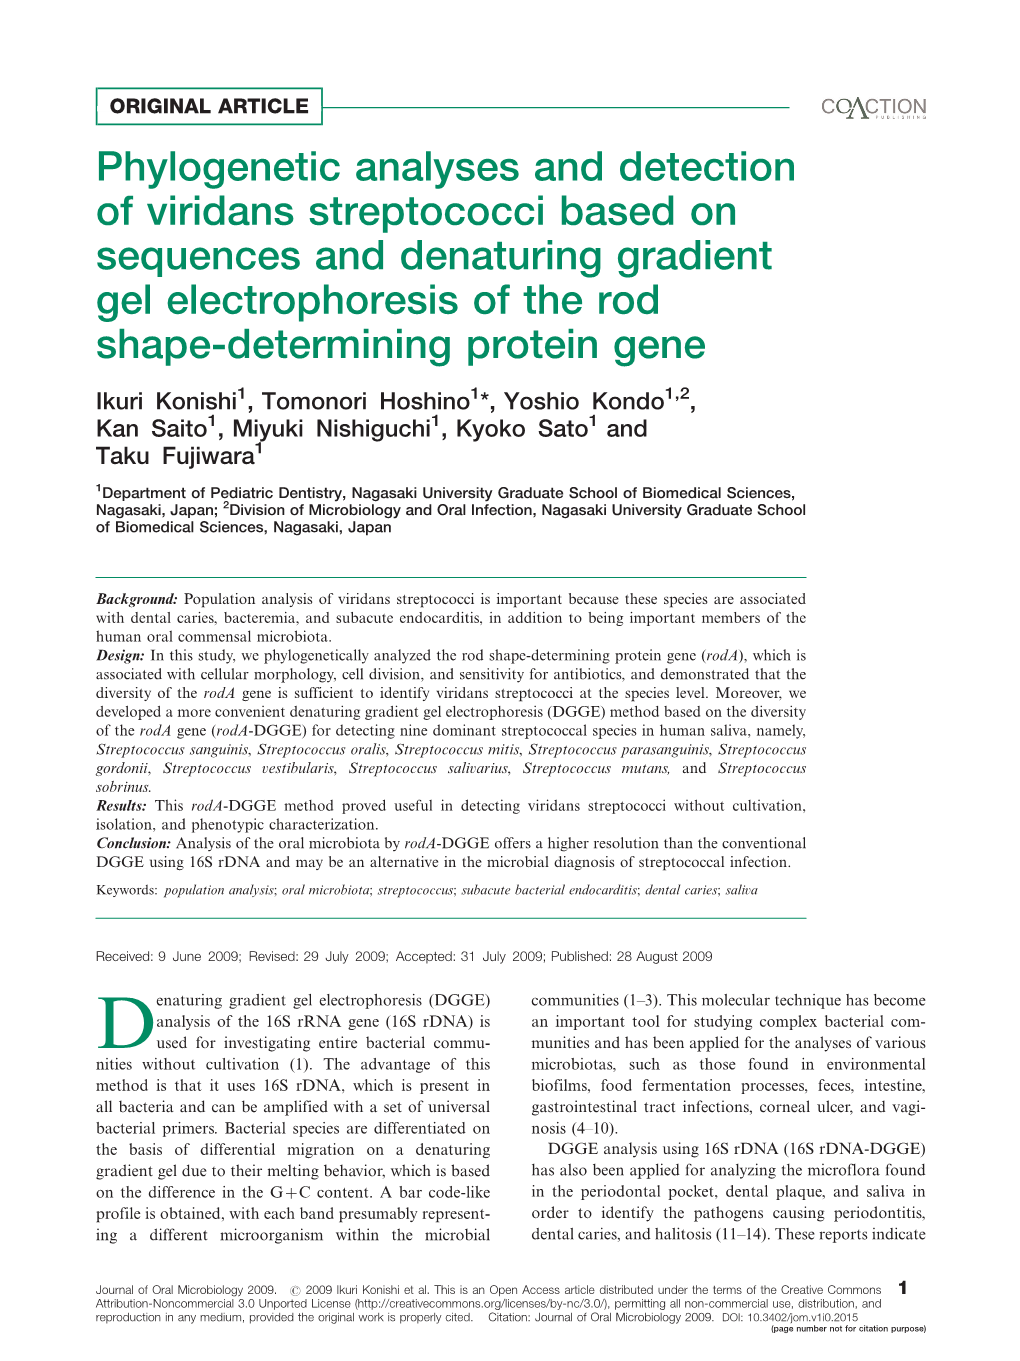 Phylogenetic Analyses and Detection of Viridans Streptococci Based On